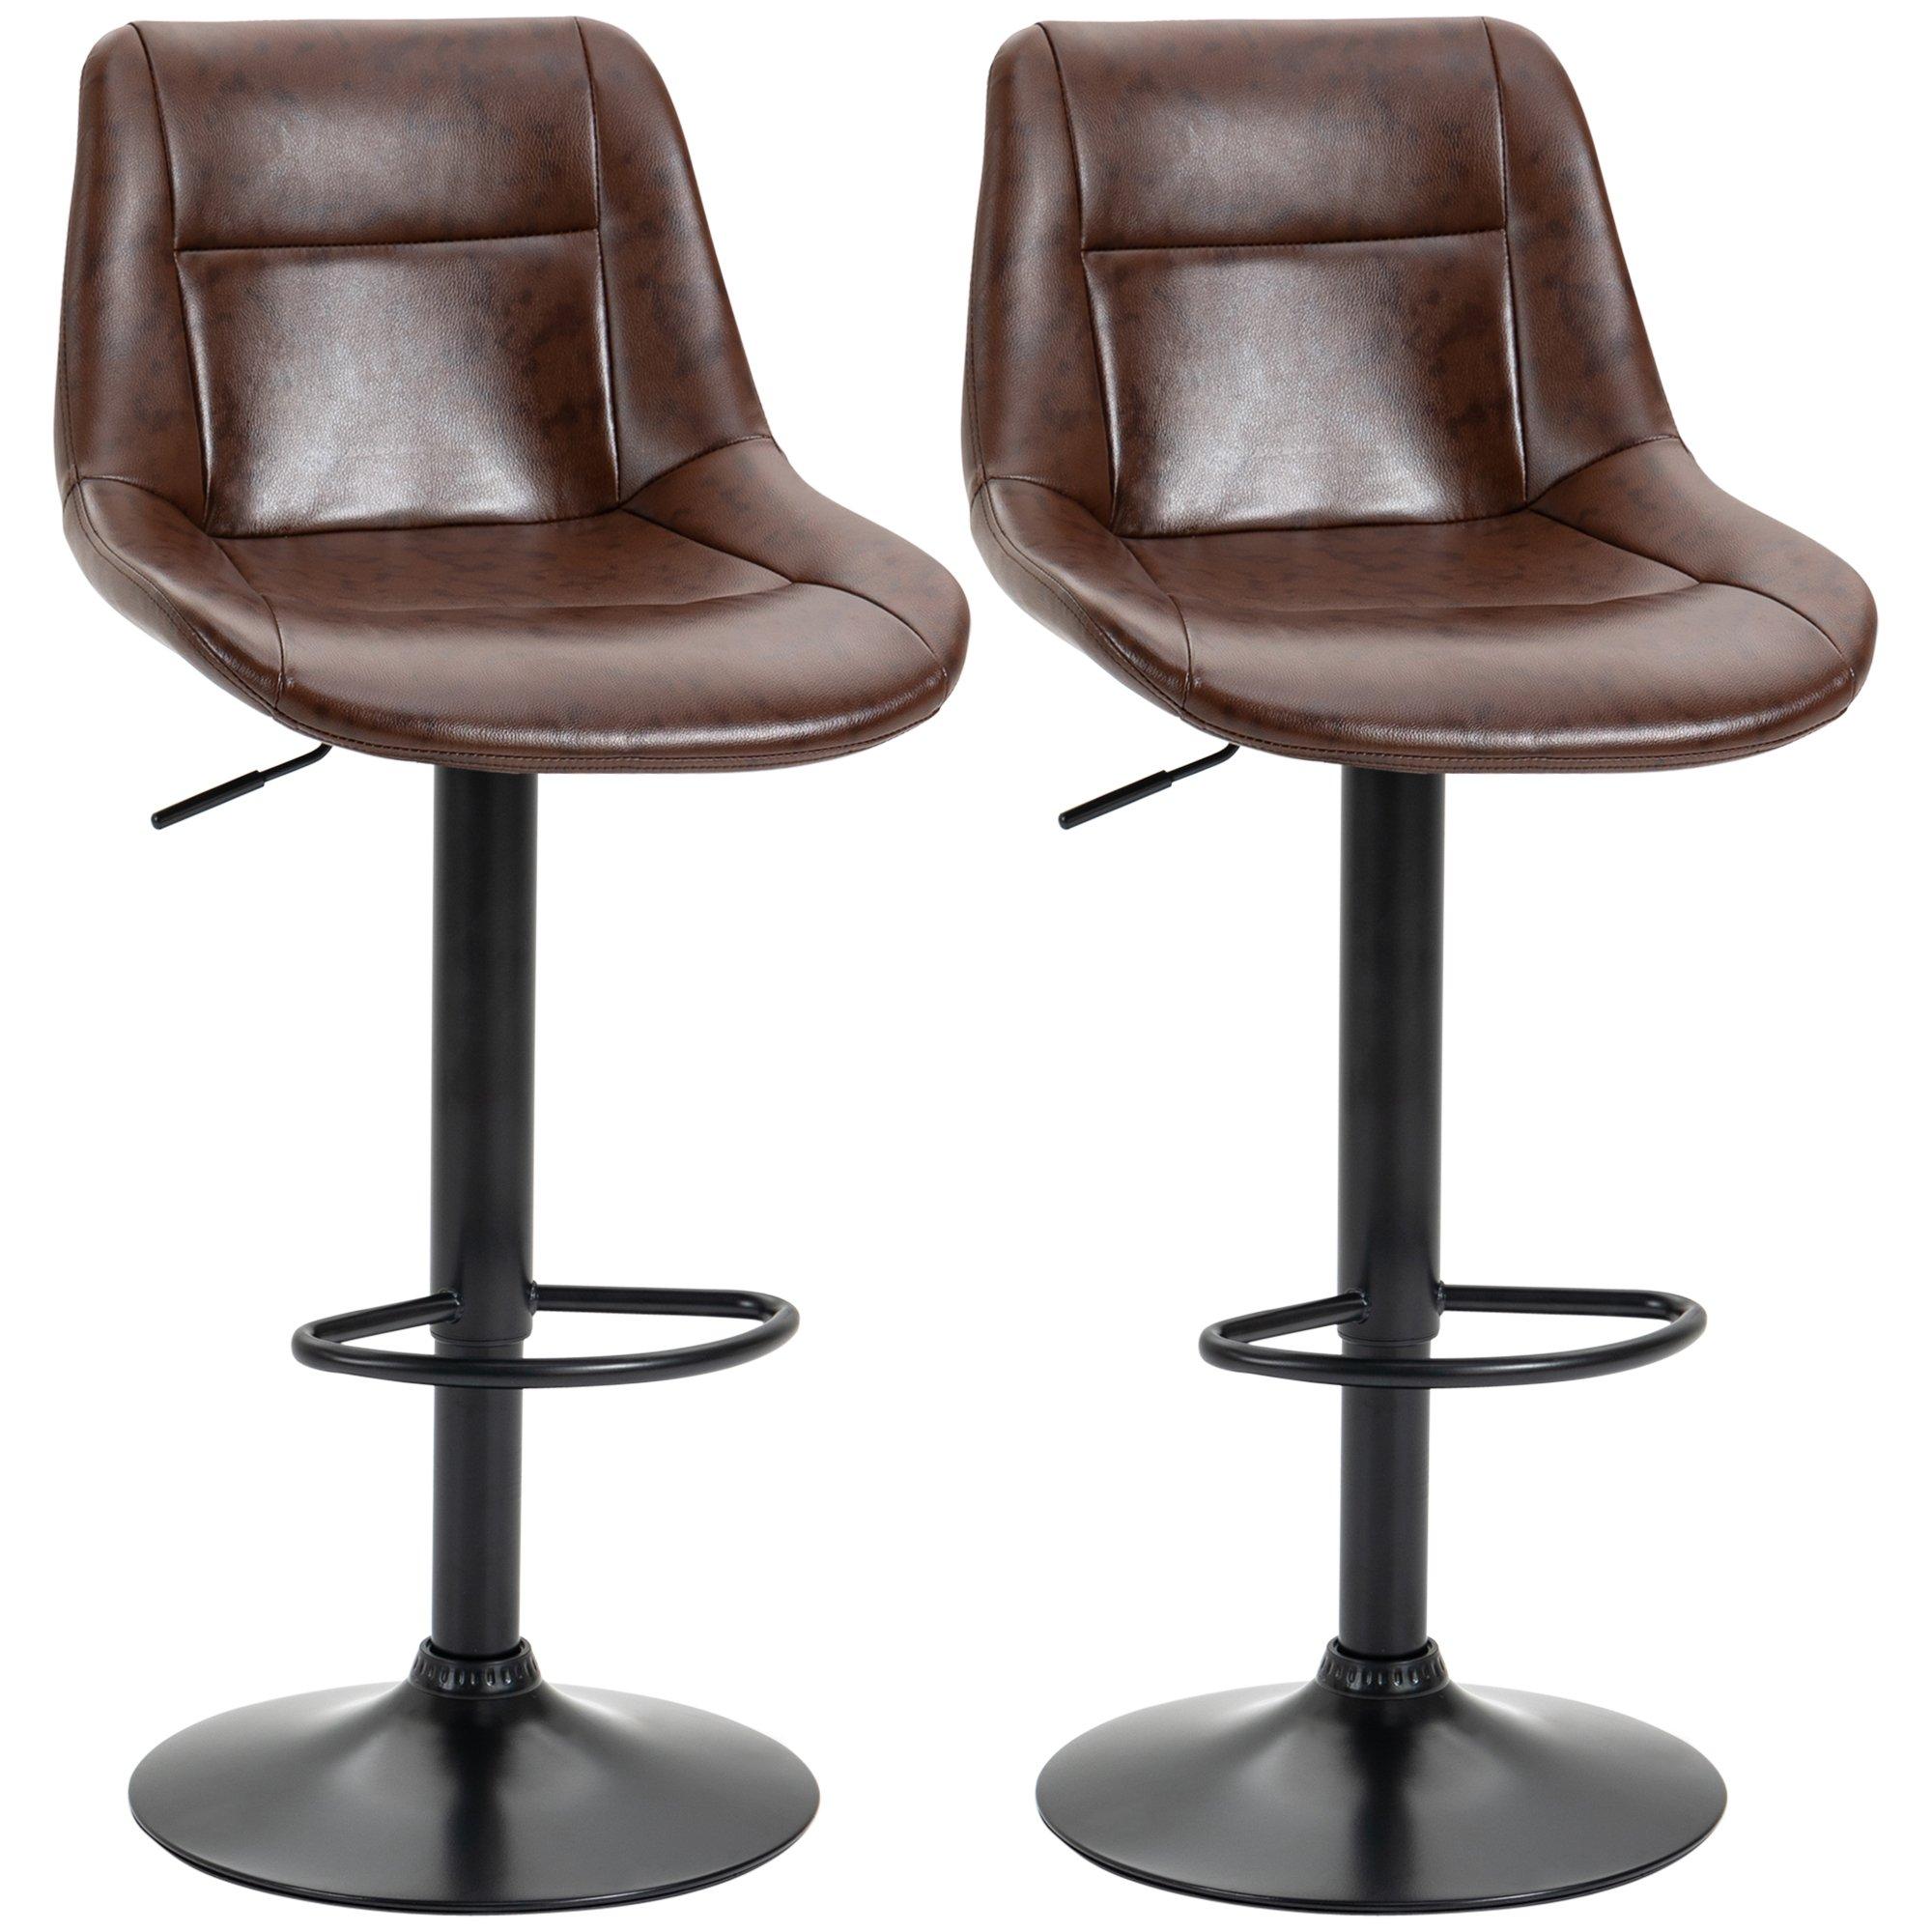 Modern Swivel Bar Stools Set of Adjustable Height Bar Chairs Footrest